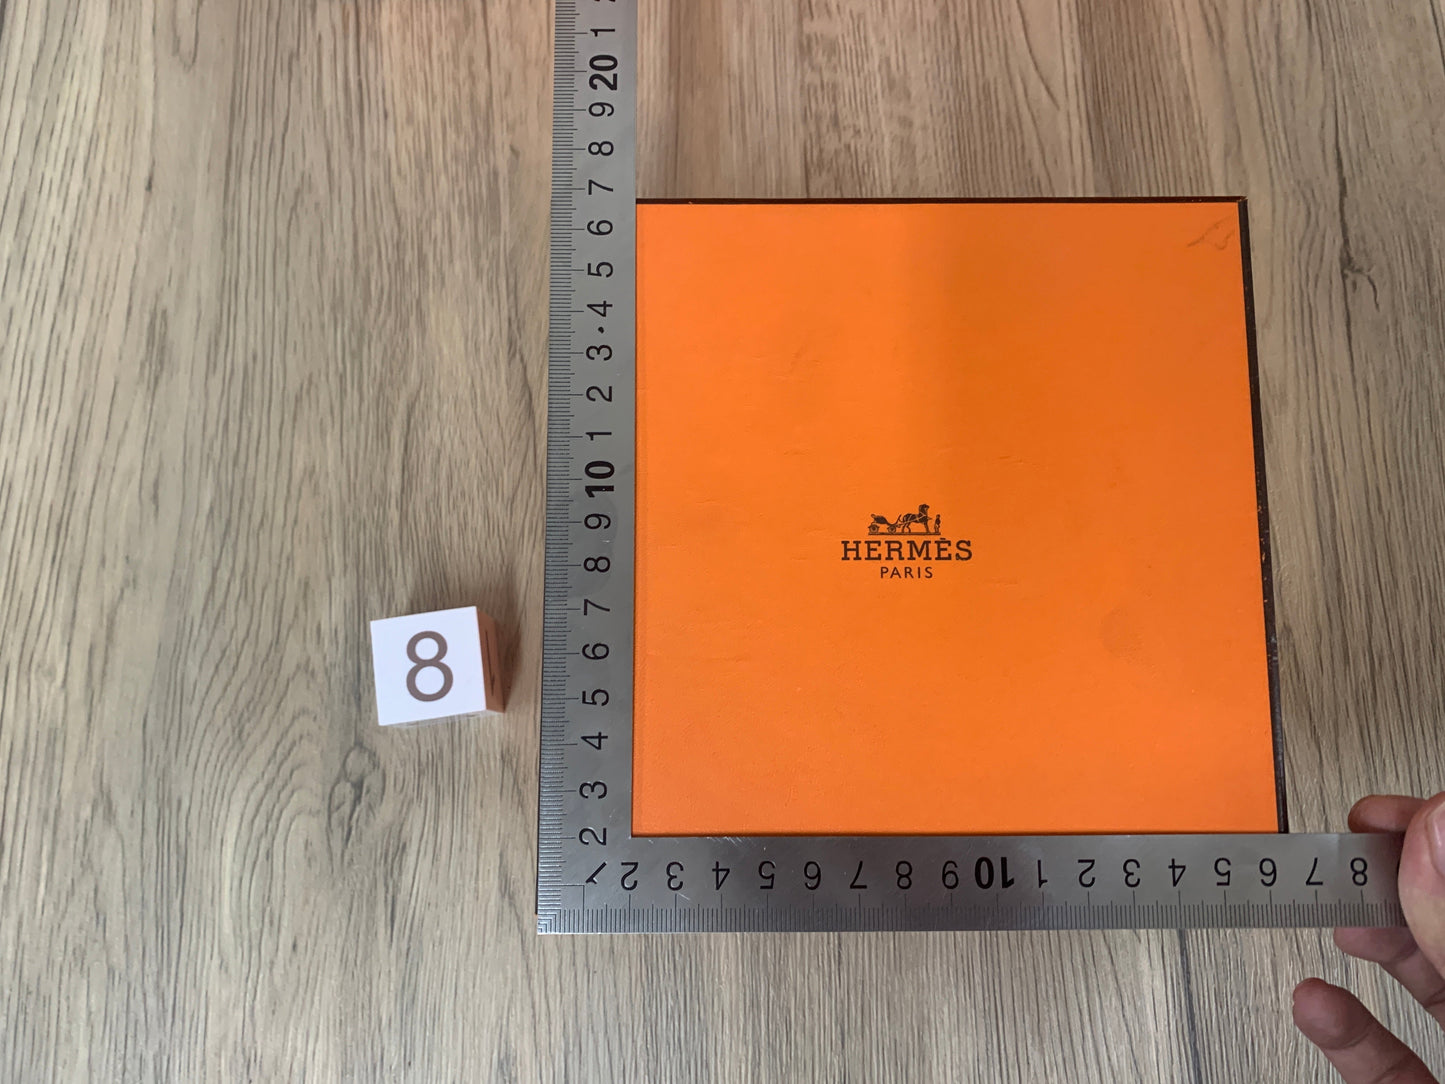 Hermes orange box, storage Jewellery trinket box, Gift box ideas, collectible box with paper box, wallet necklace bracelet box - 17AUG22